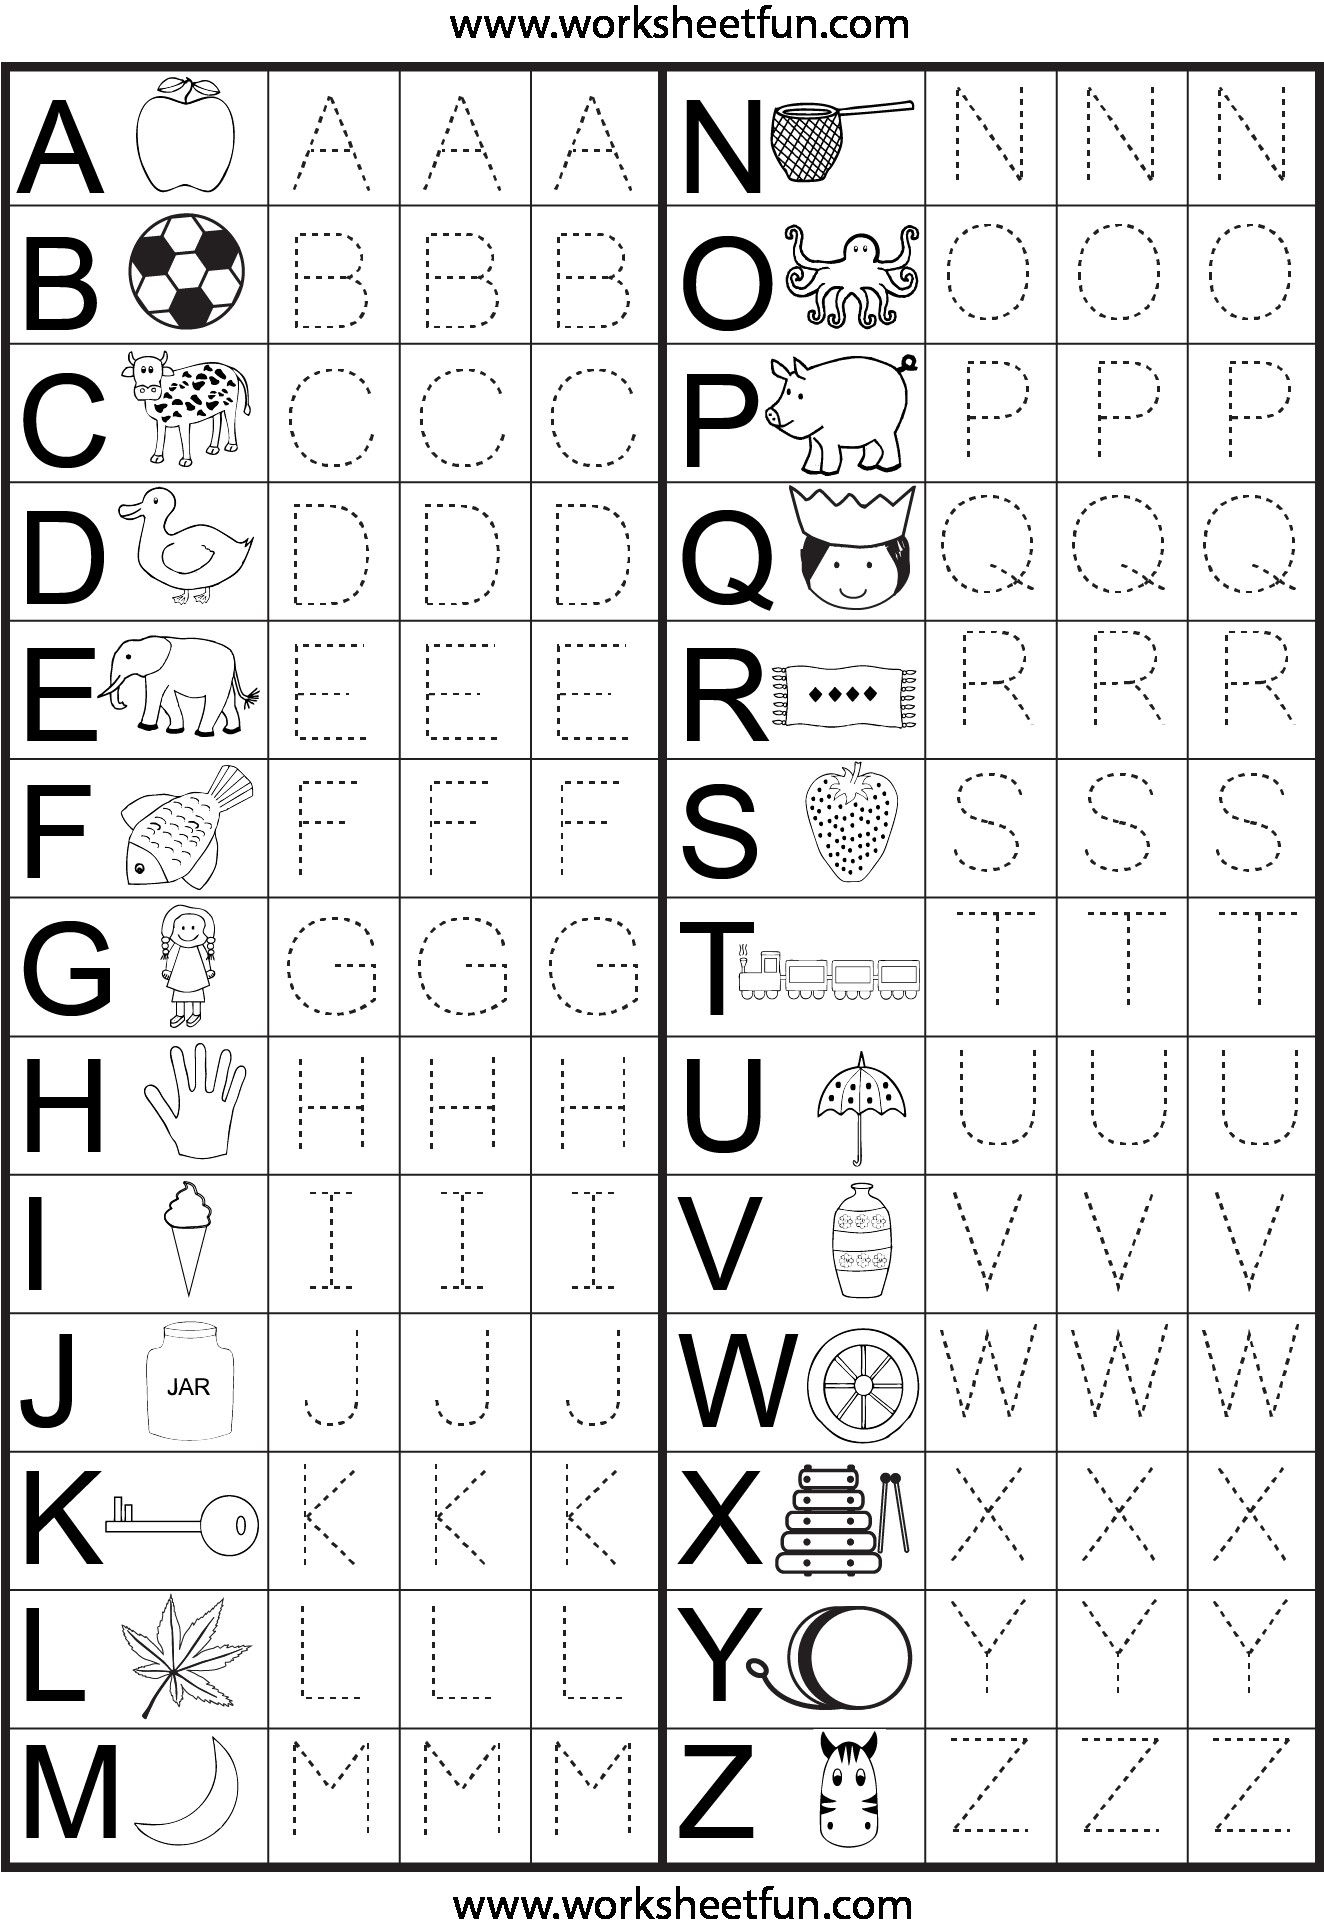 3 Preschool Letter Worksheets 2 Great Great Great Website So for Alphabet Worksheets Pinterest